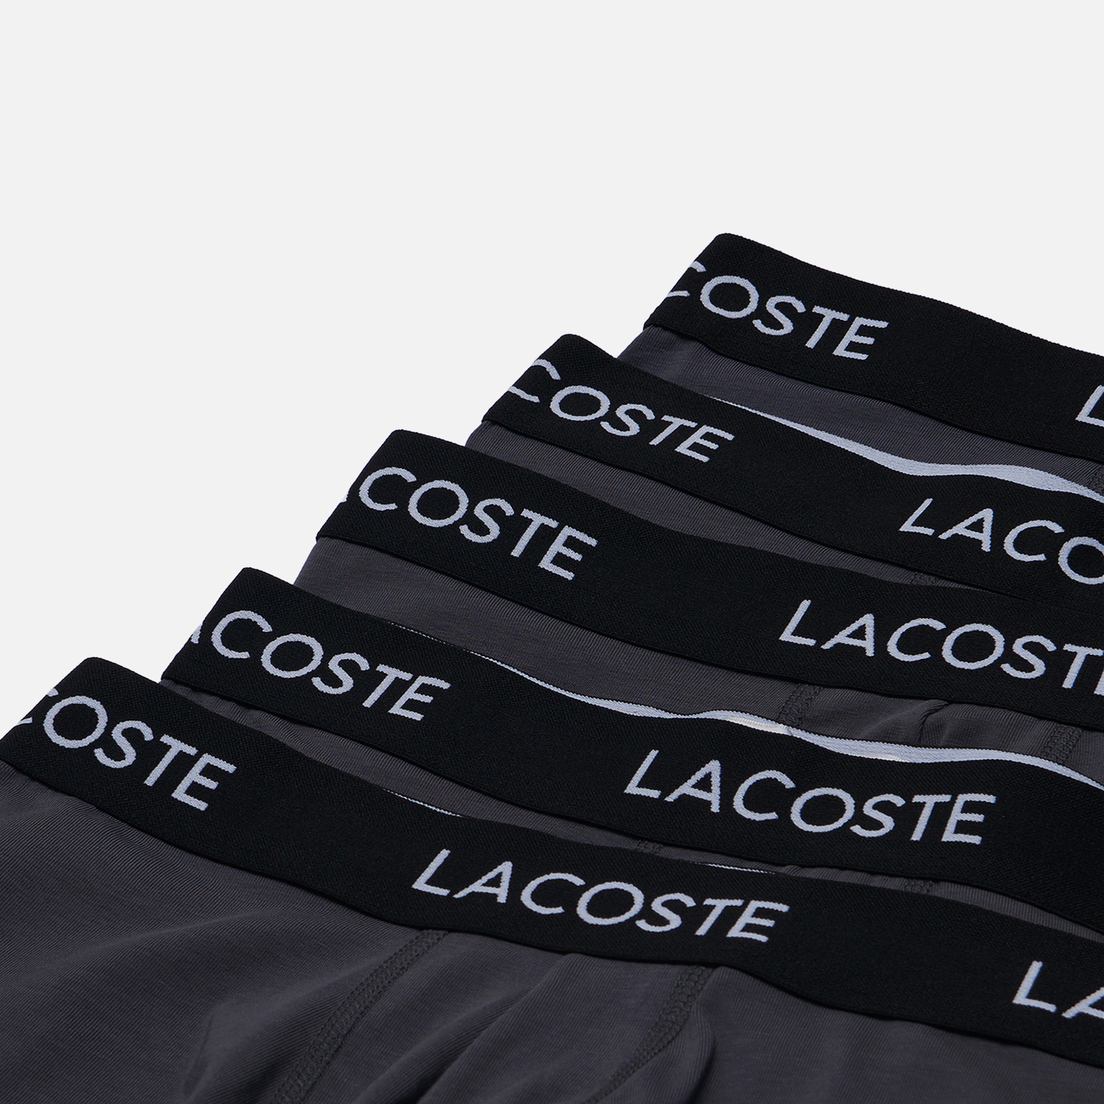 Lacoste Underwear Комплект мужских трусов 5-Pack Stretch Cotton